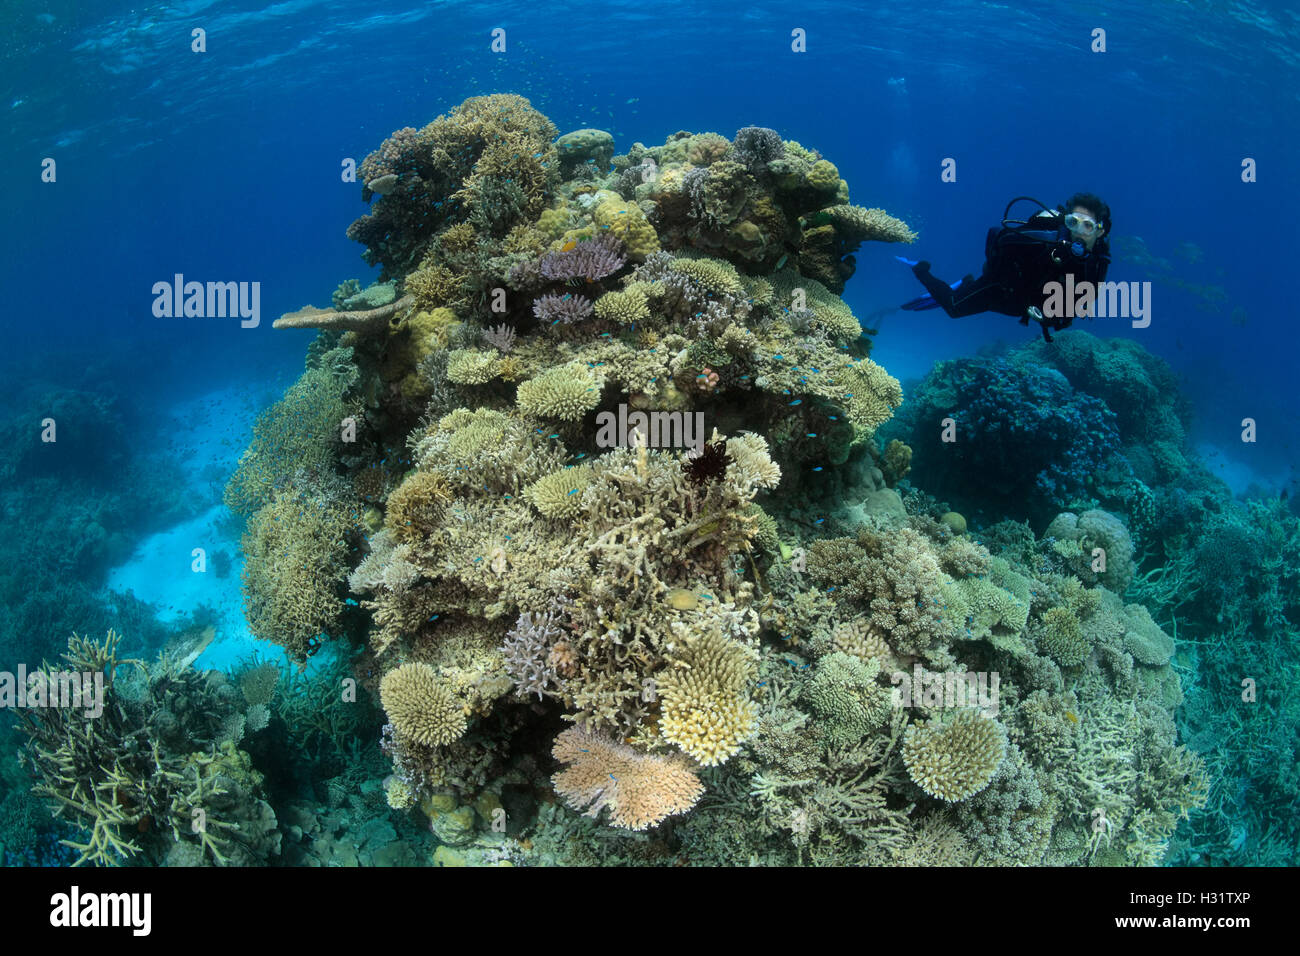 QZ0675-D. Taucher schwimmt herum Korallen Pinnacle nenne Australier "Bommie". Australien, Great Barrier Reef, Pacific Ocea Stockfoto